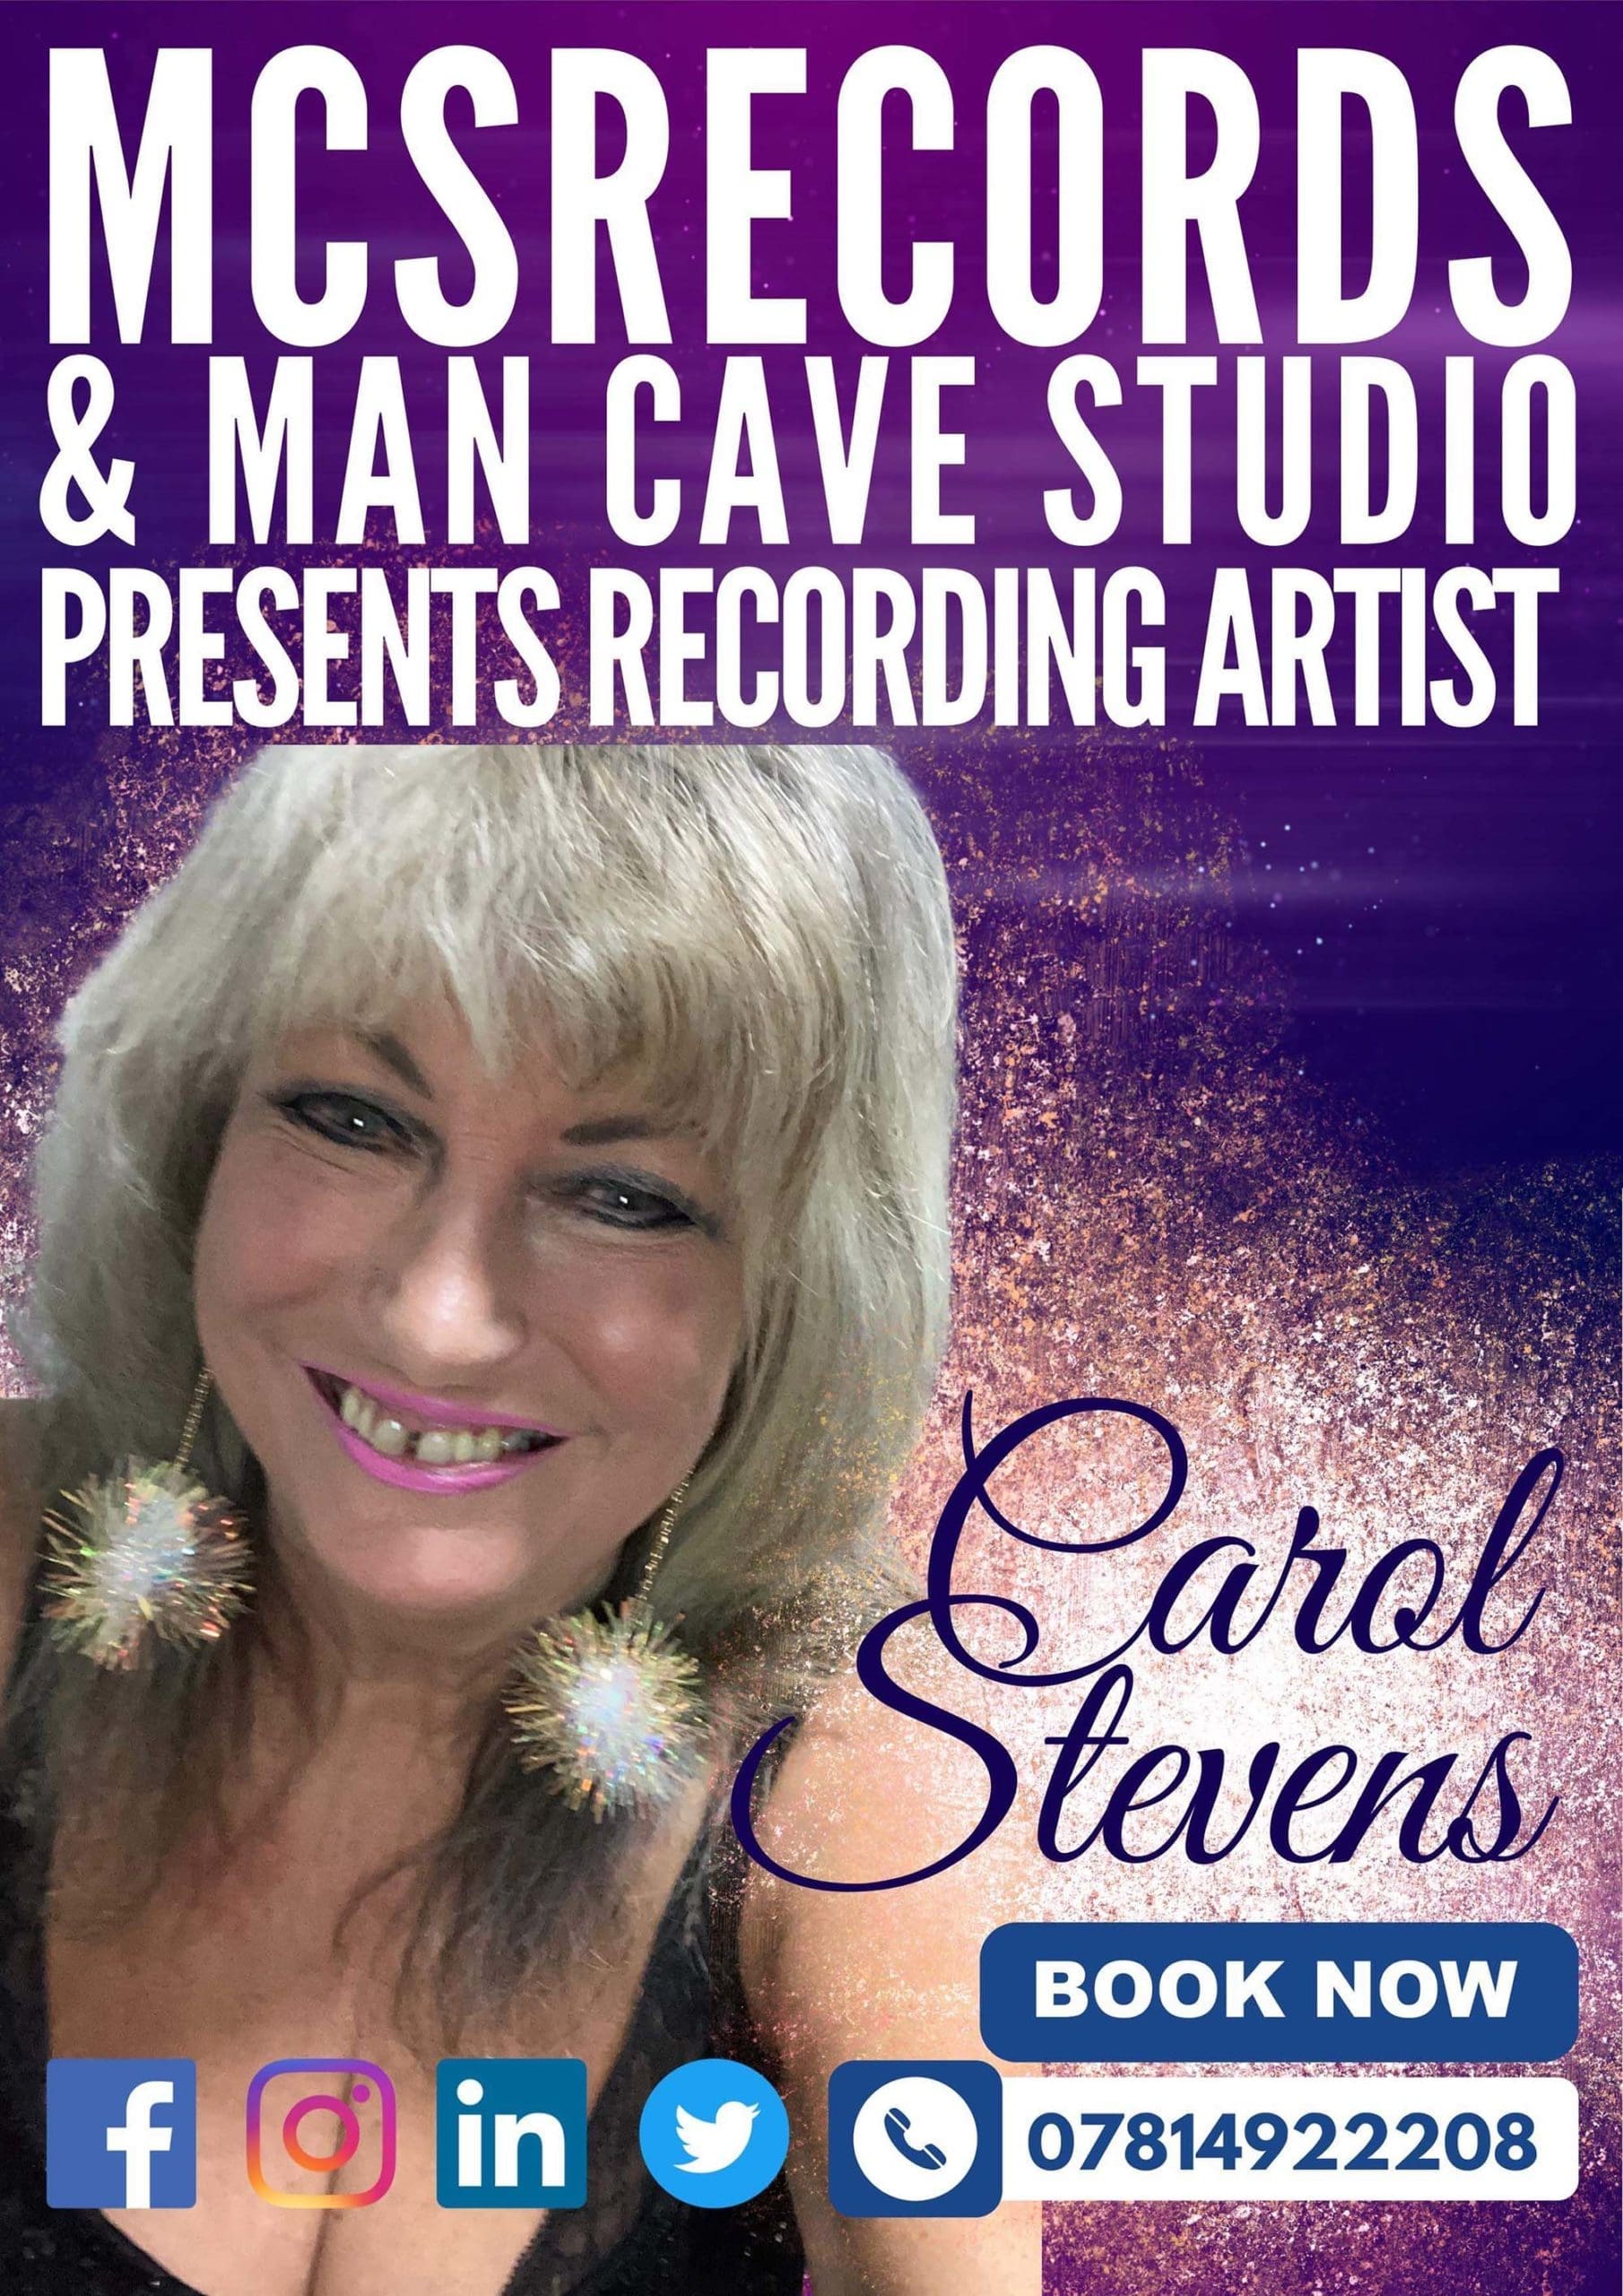 Artist-panels - ad Carol Stevens